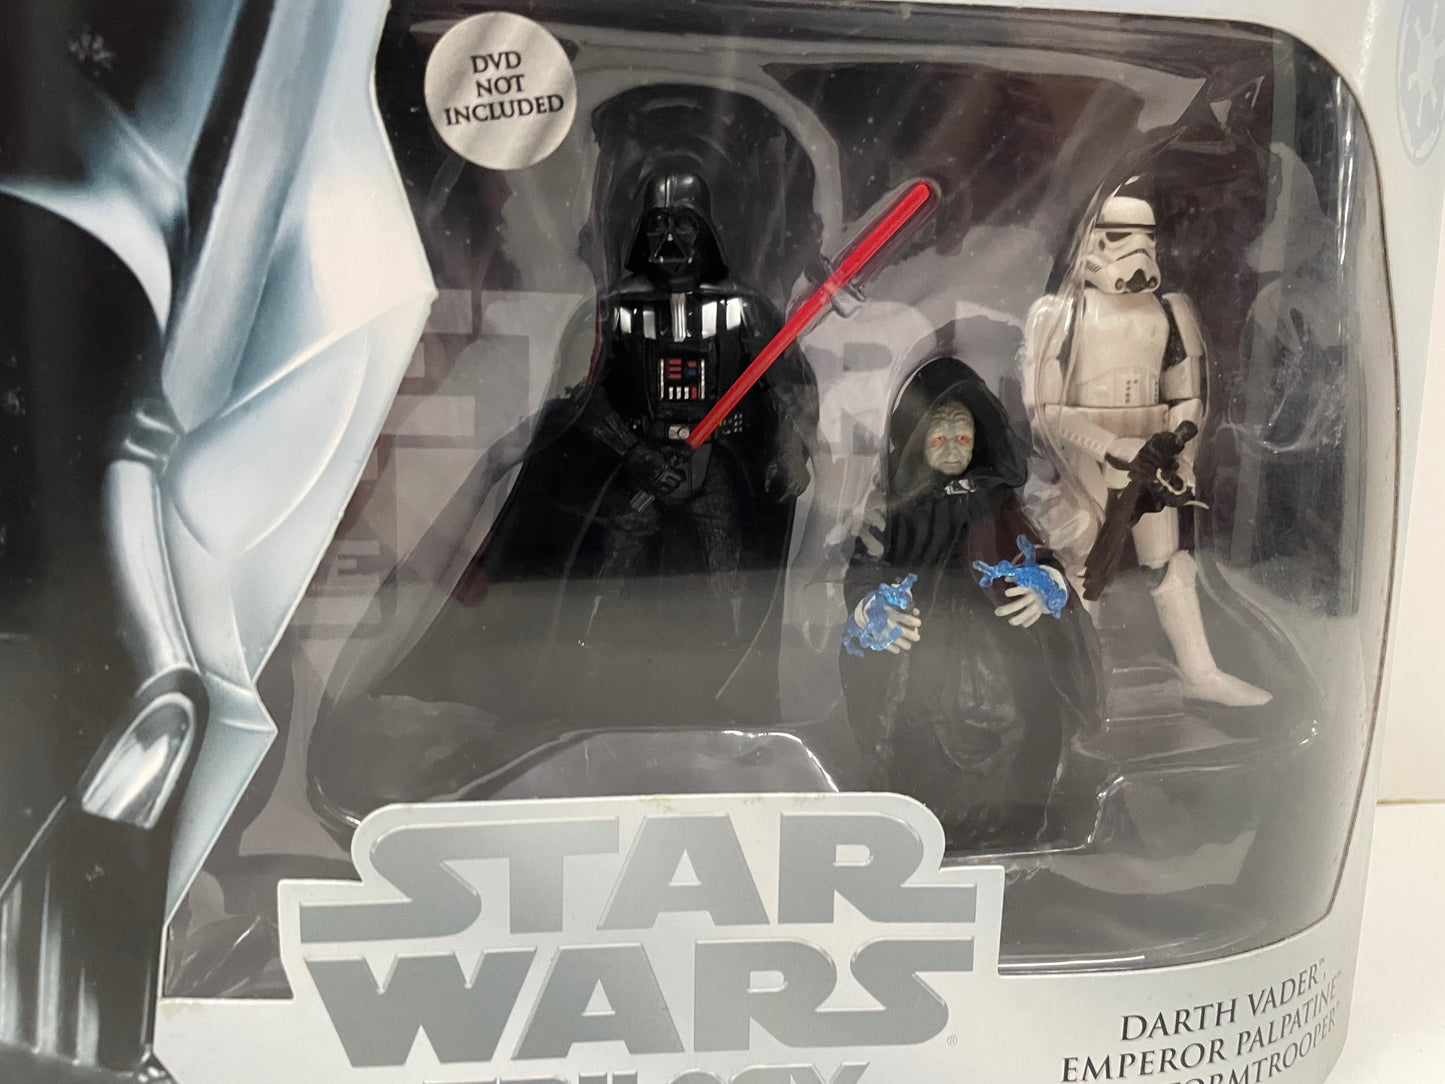 Return of the Jedi Darth Vader, Stormtrooper & Emperor Palpatine Figure DVD Set, Hasbro 2004